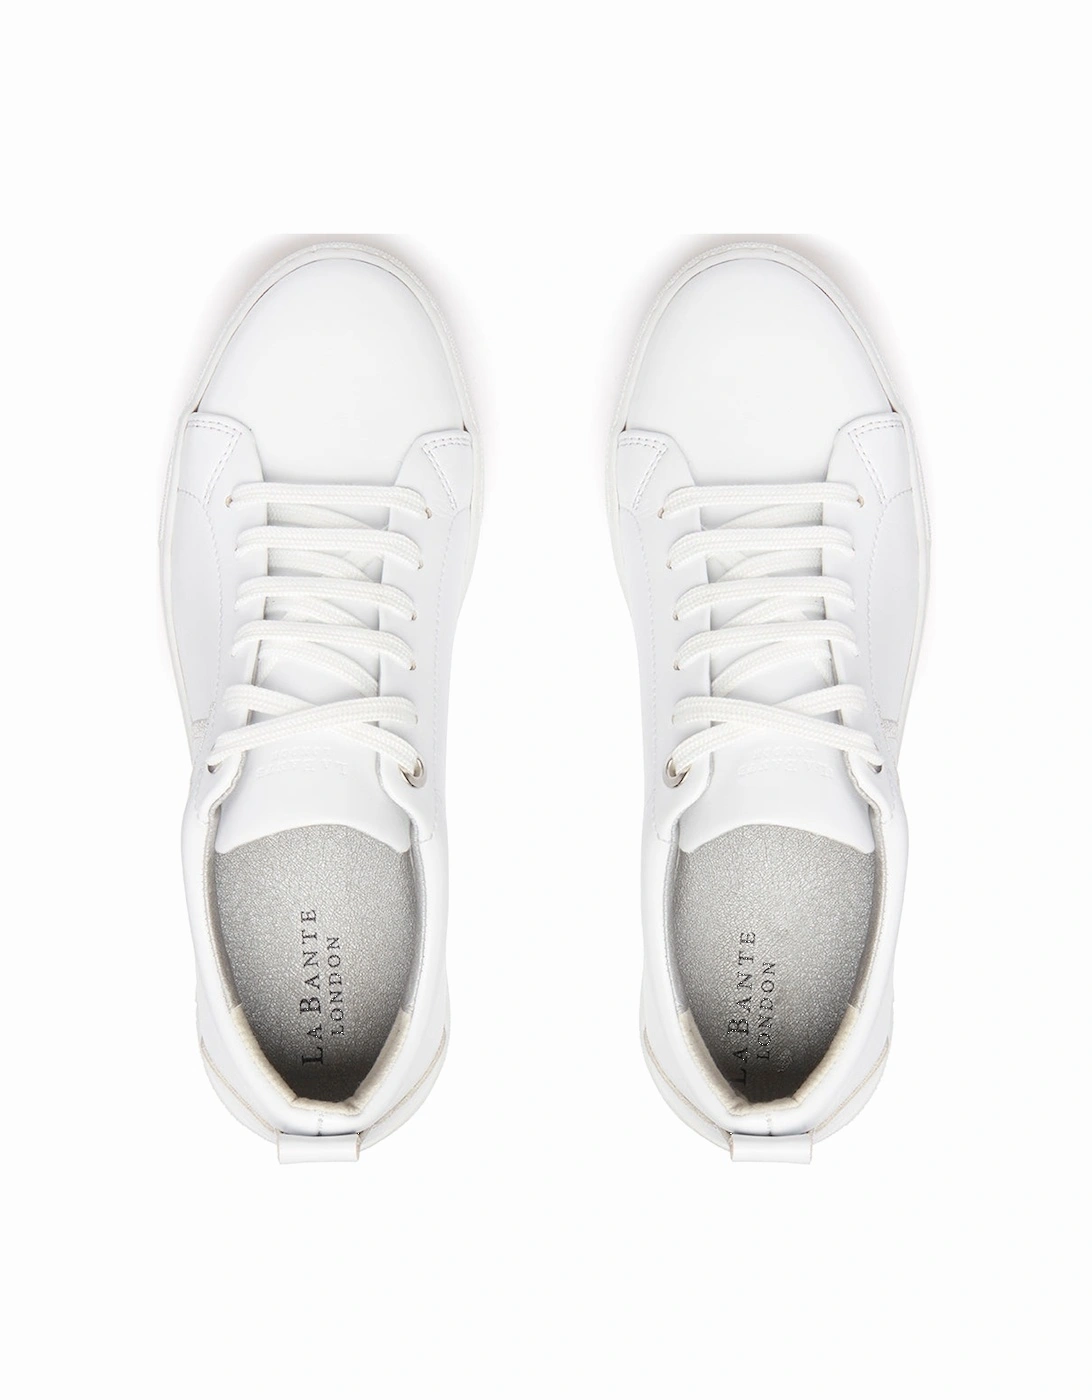 LB White Apple Leather Sneakers Women